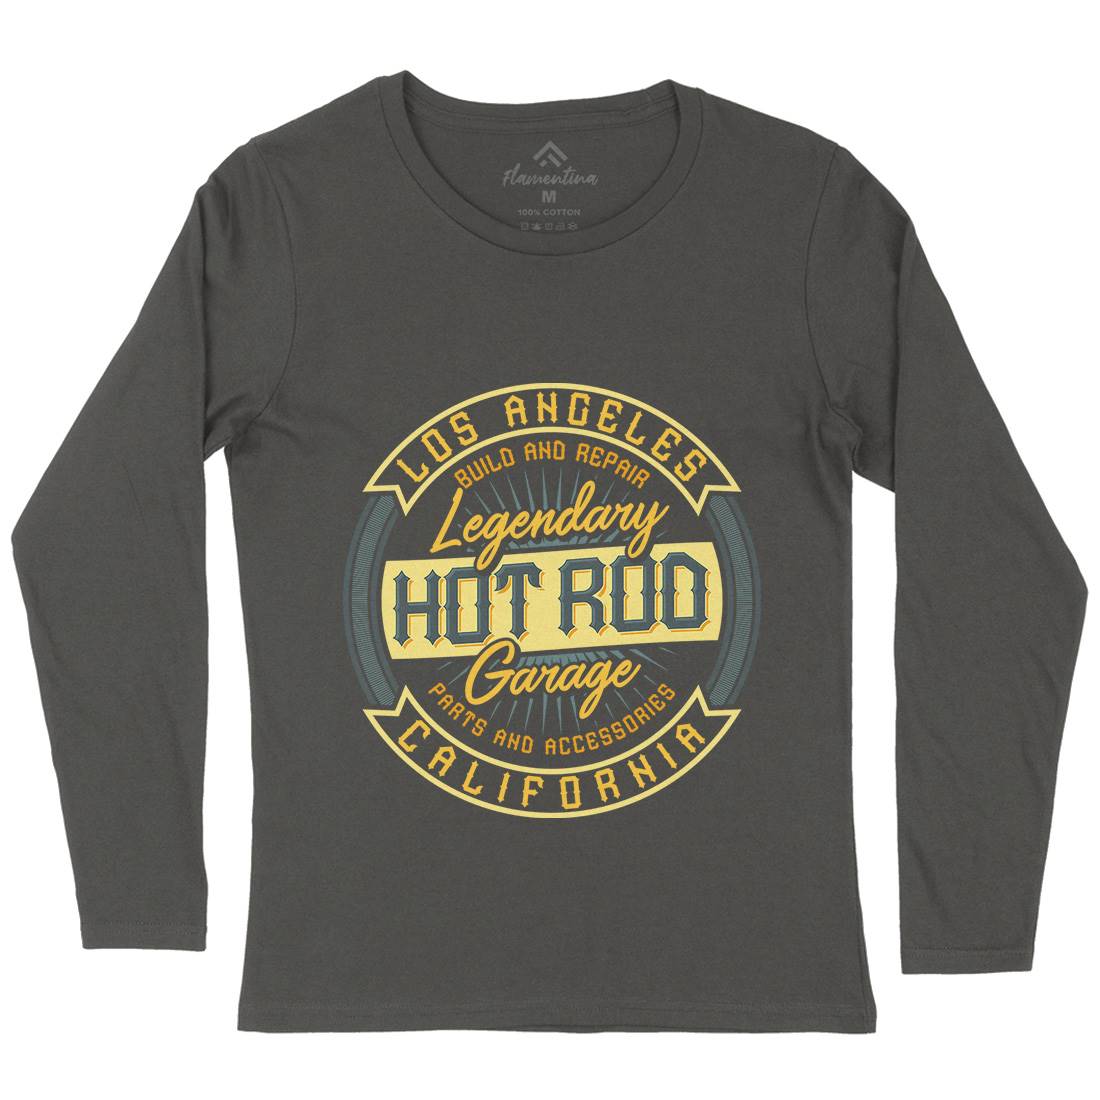 Hot Rod Womens Long Sleeve T-Shirt Cars B306